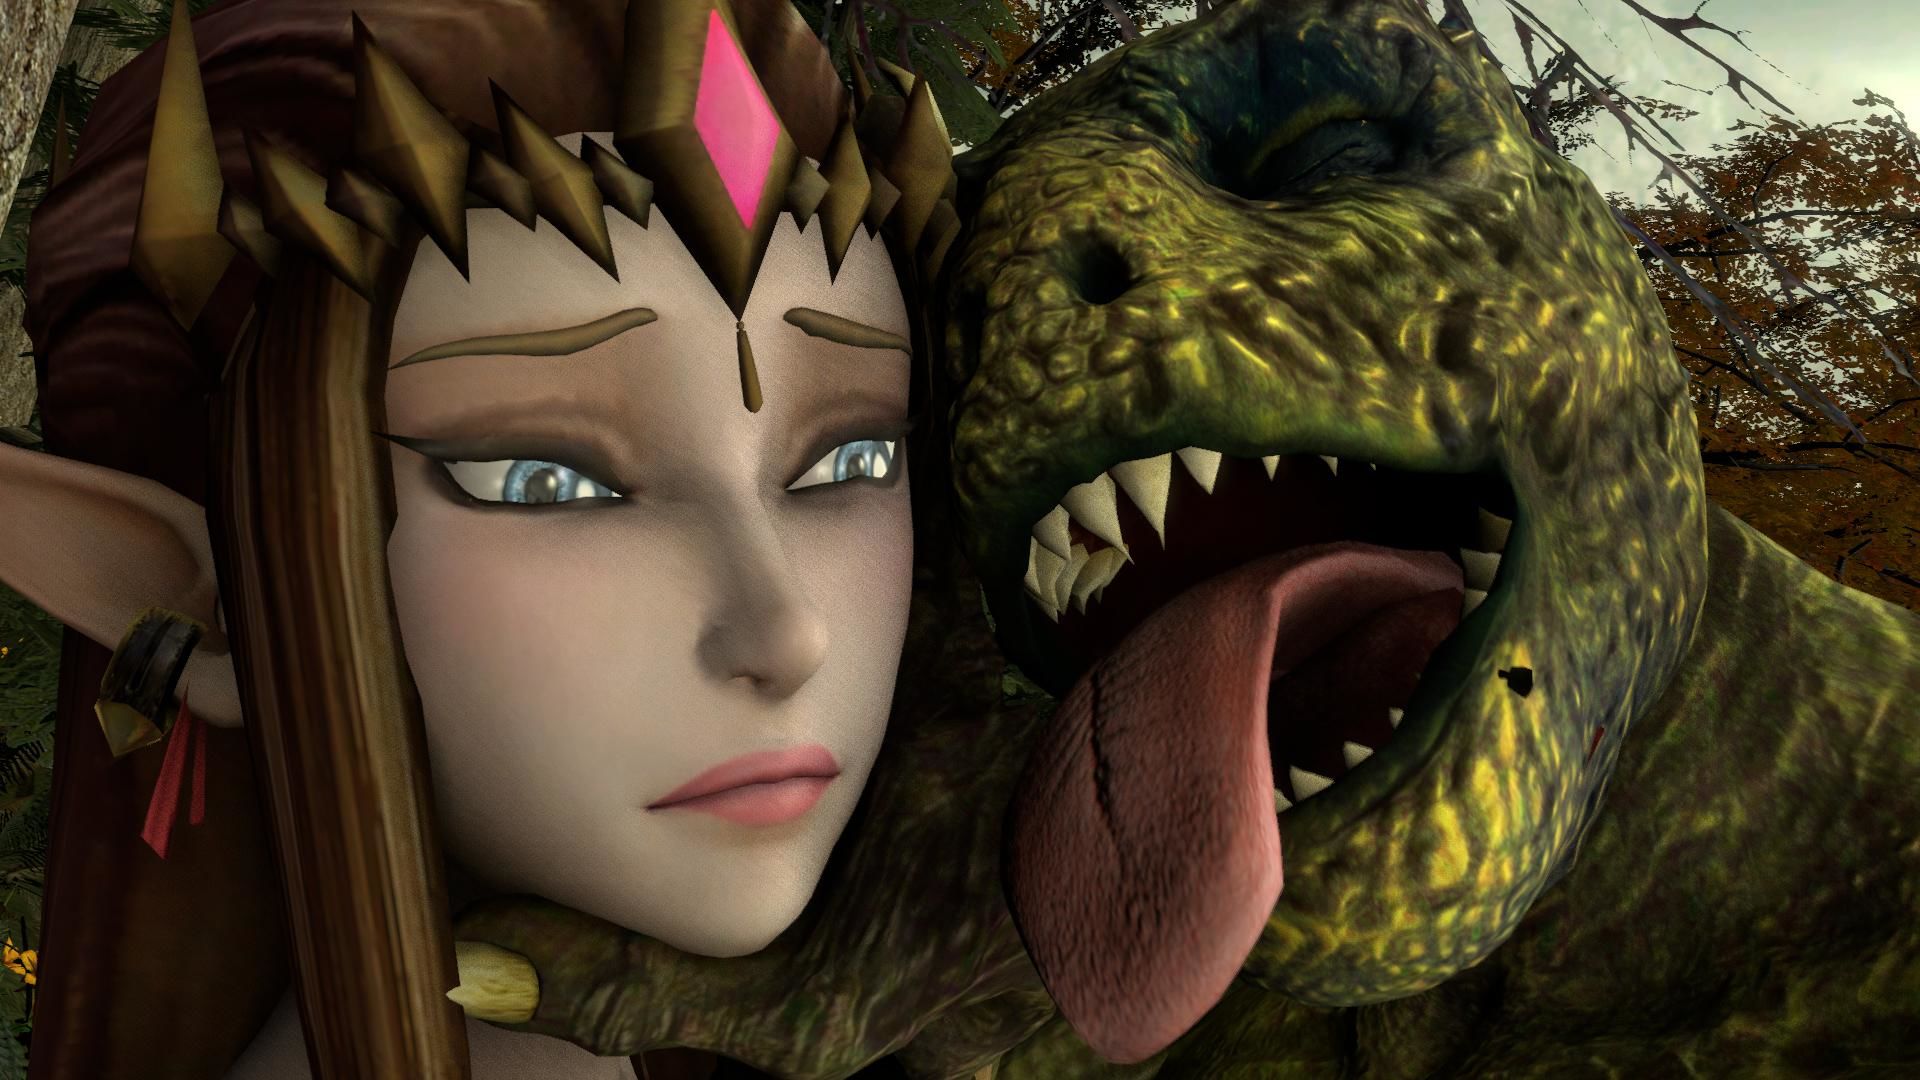 Zelda Tentacle Porn 3d - A green monster fucks and licks defenseless princess Zelda in the forest